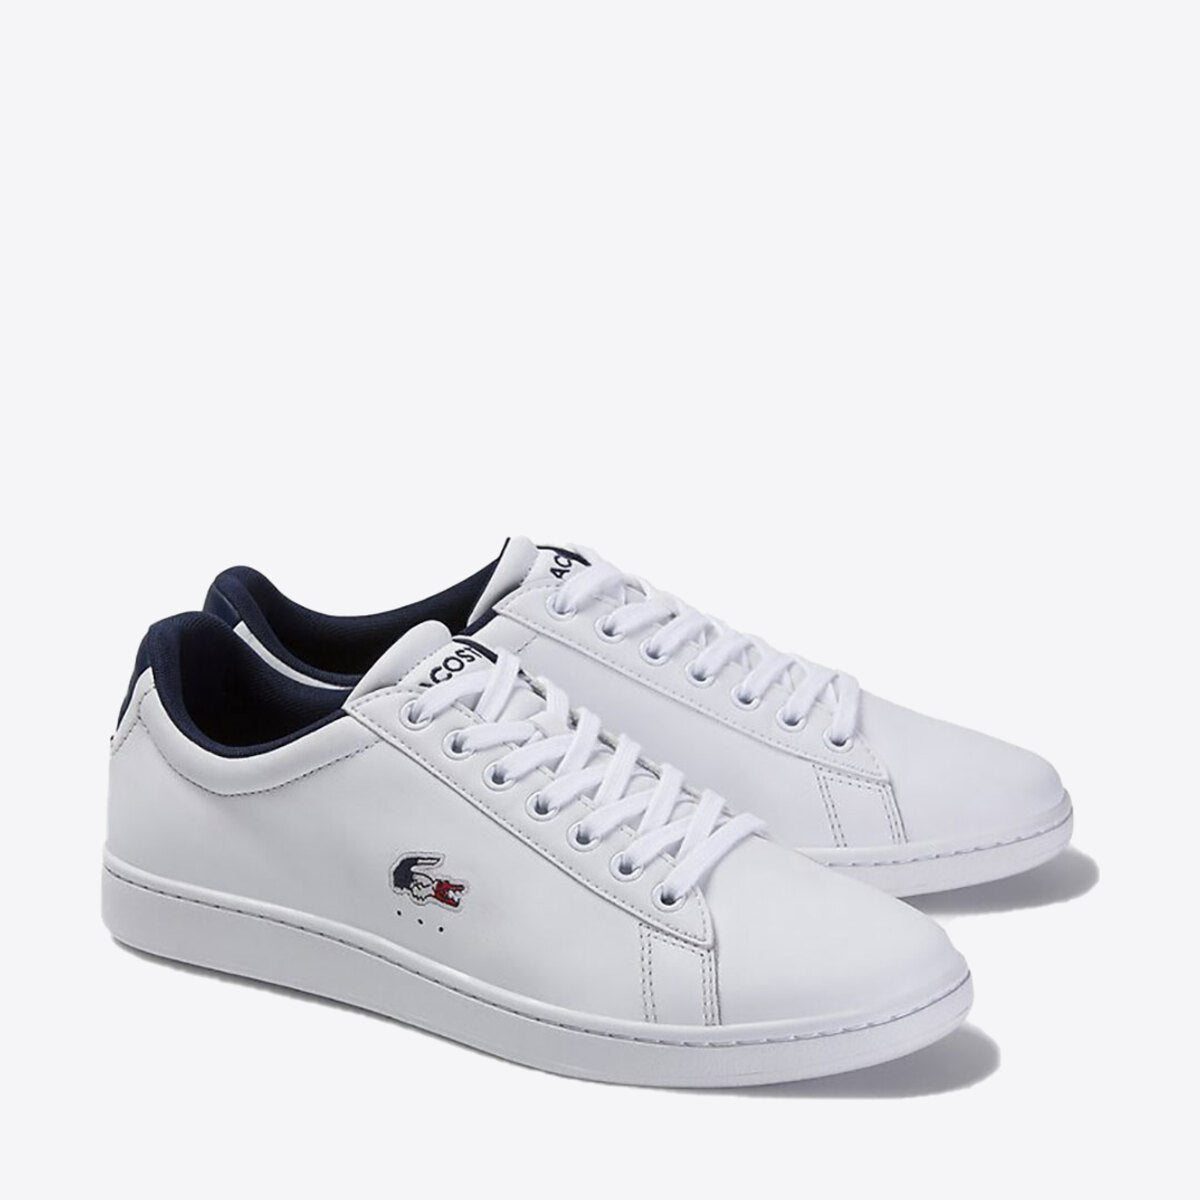  Men's Carnaby Evo Tri1 Sneaker White/Navy/Red